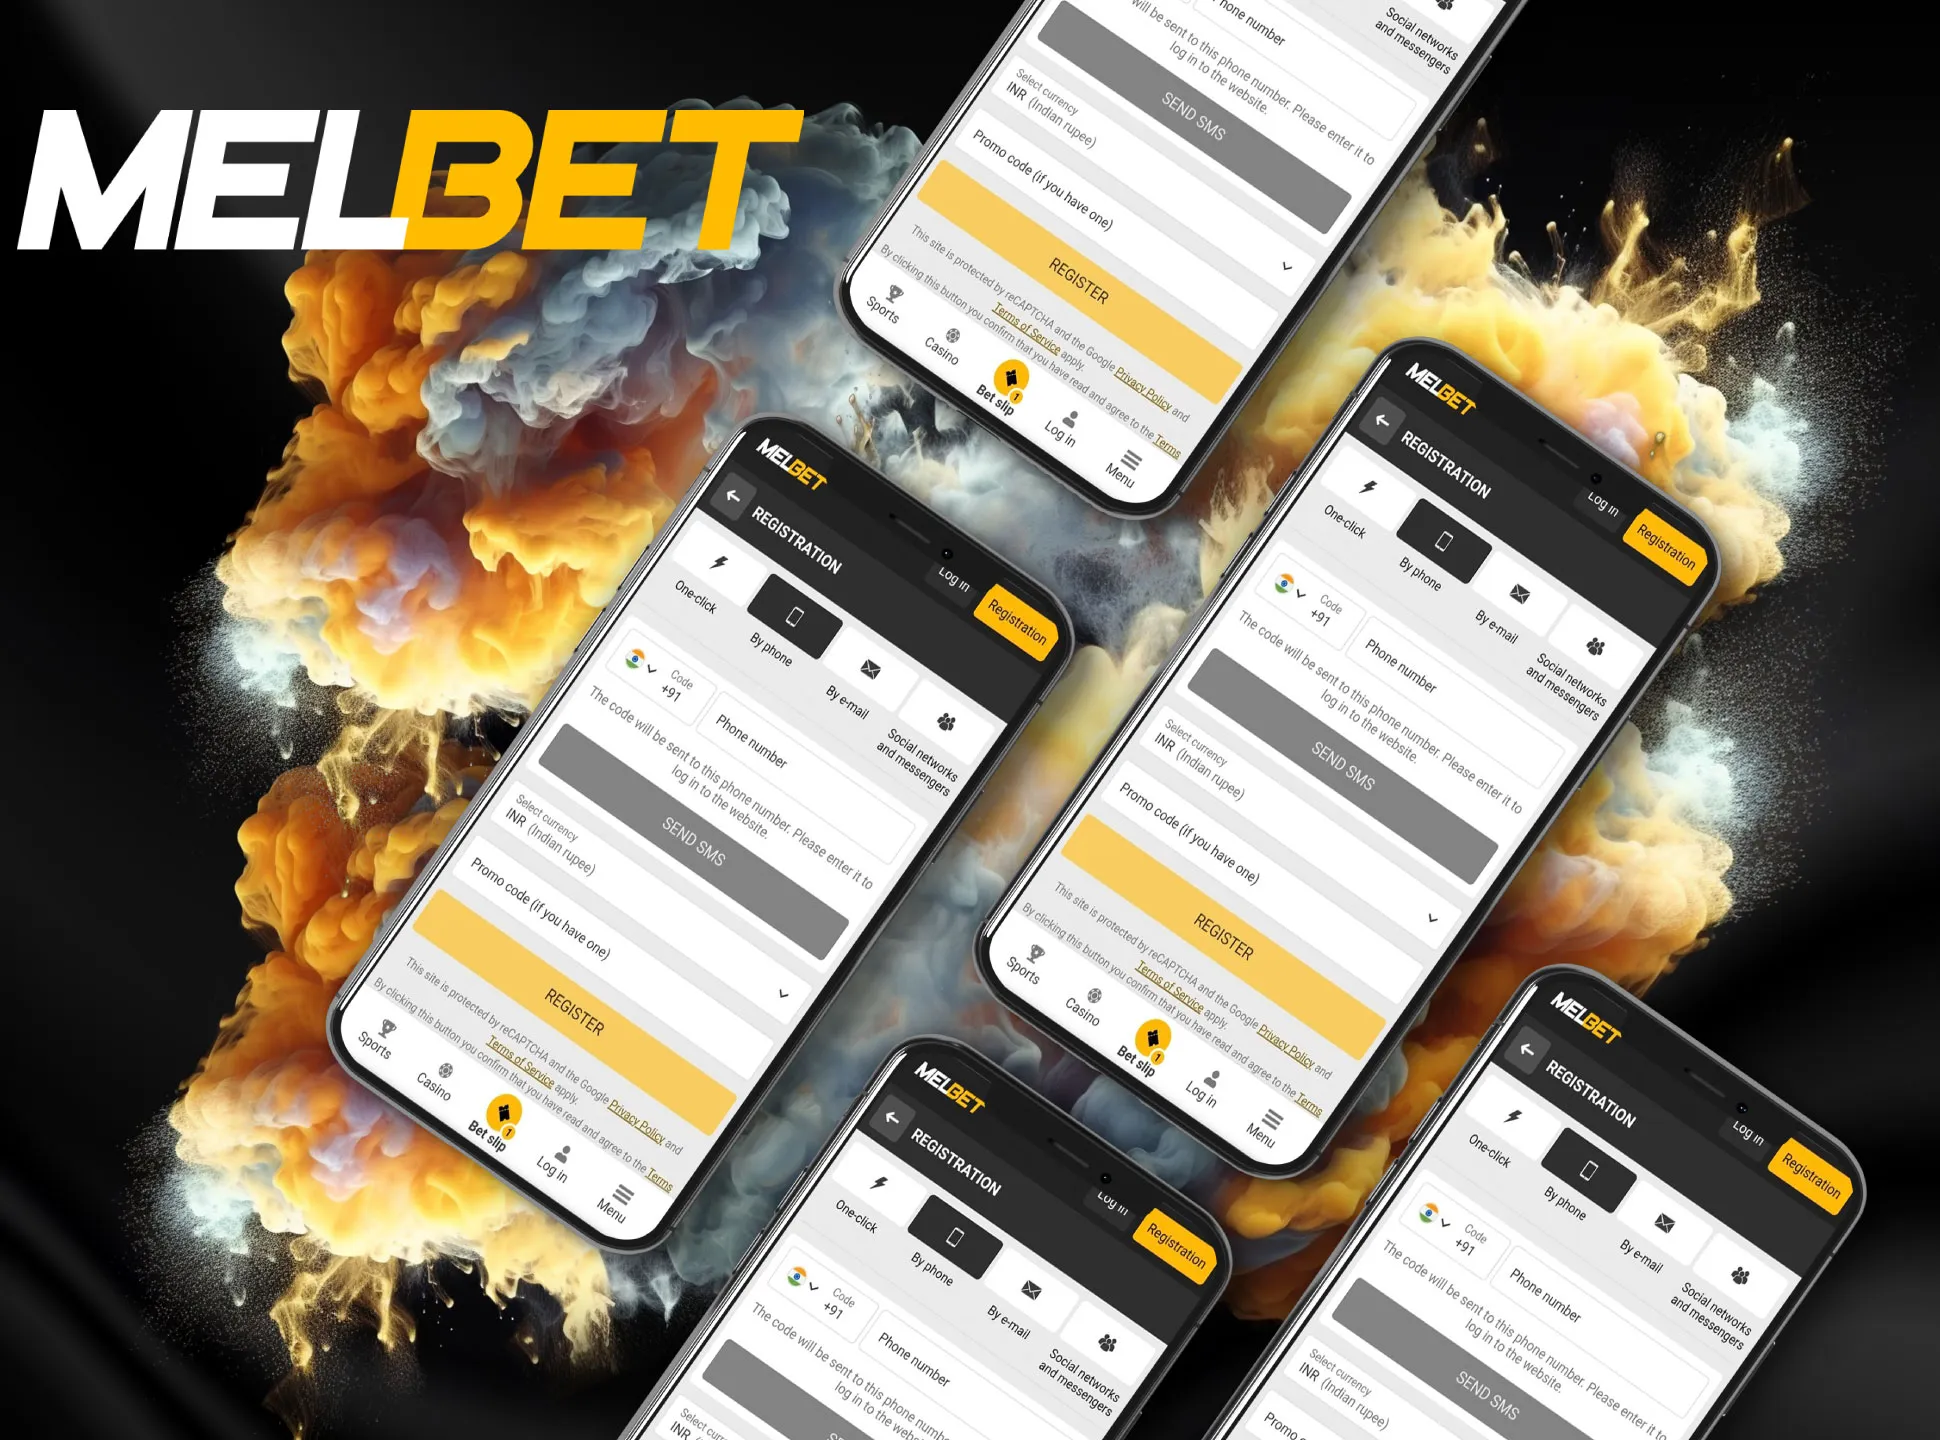 Download the Melbet app to bet via your smartphone.